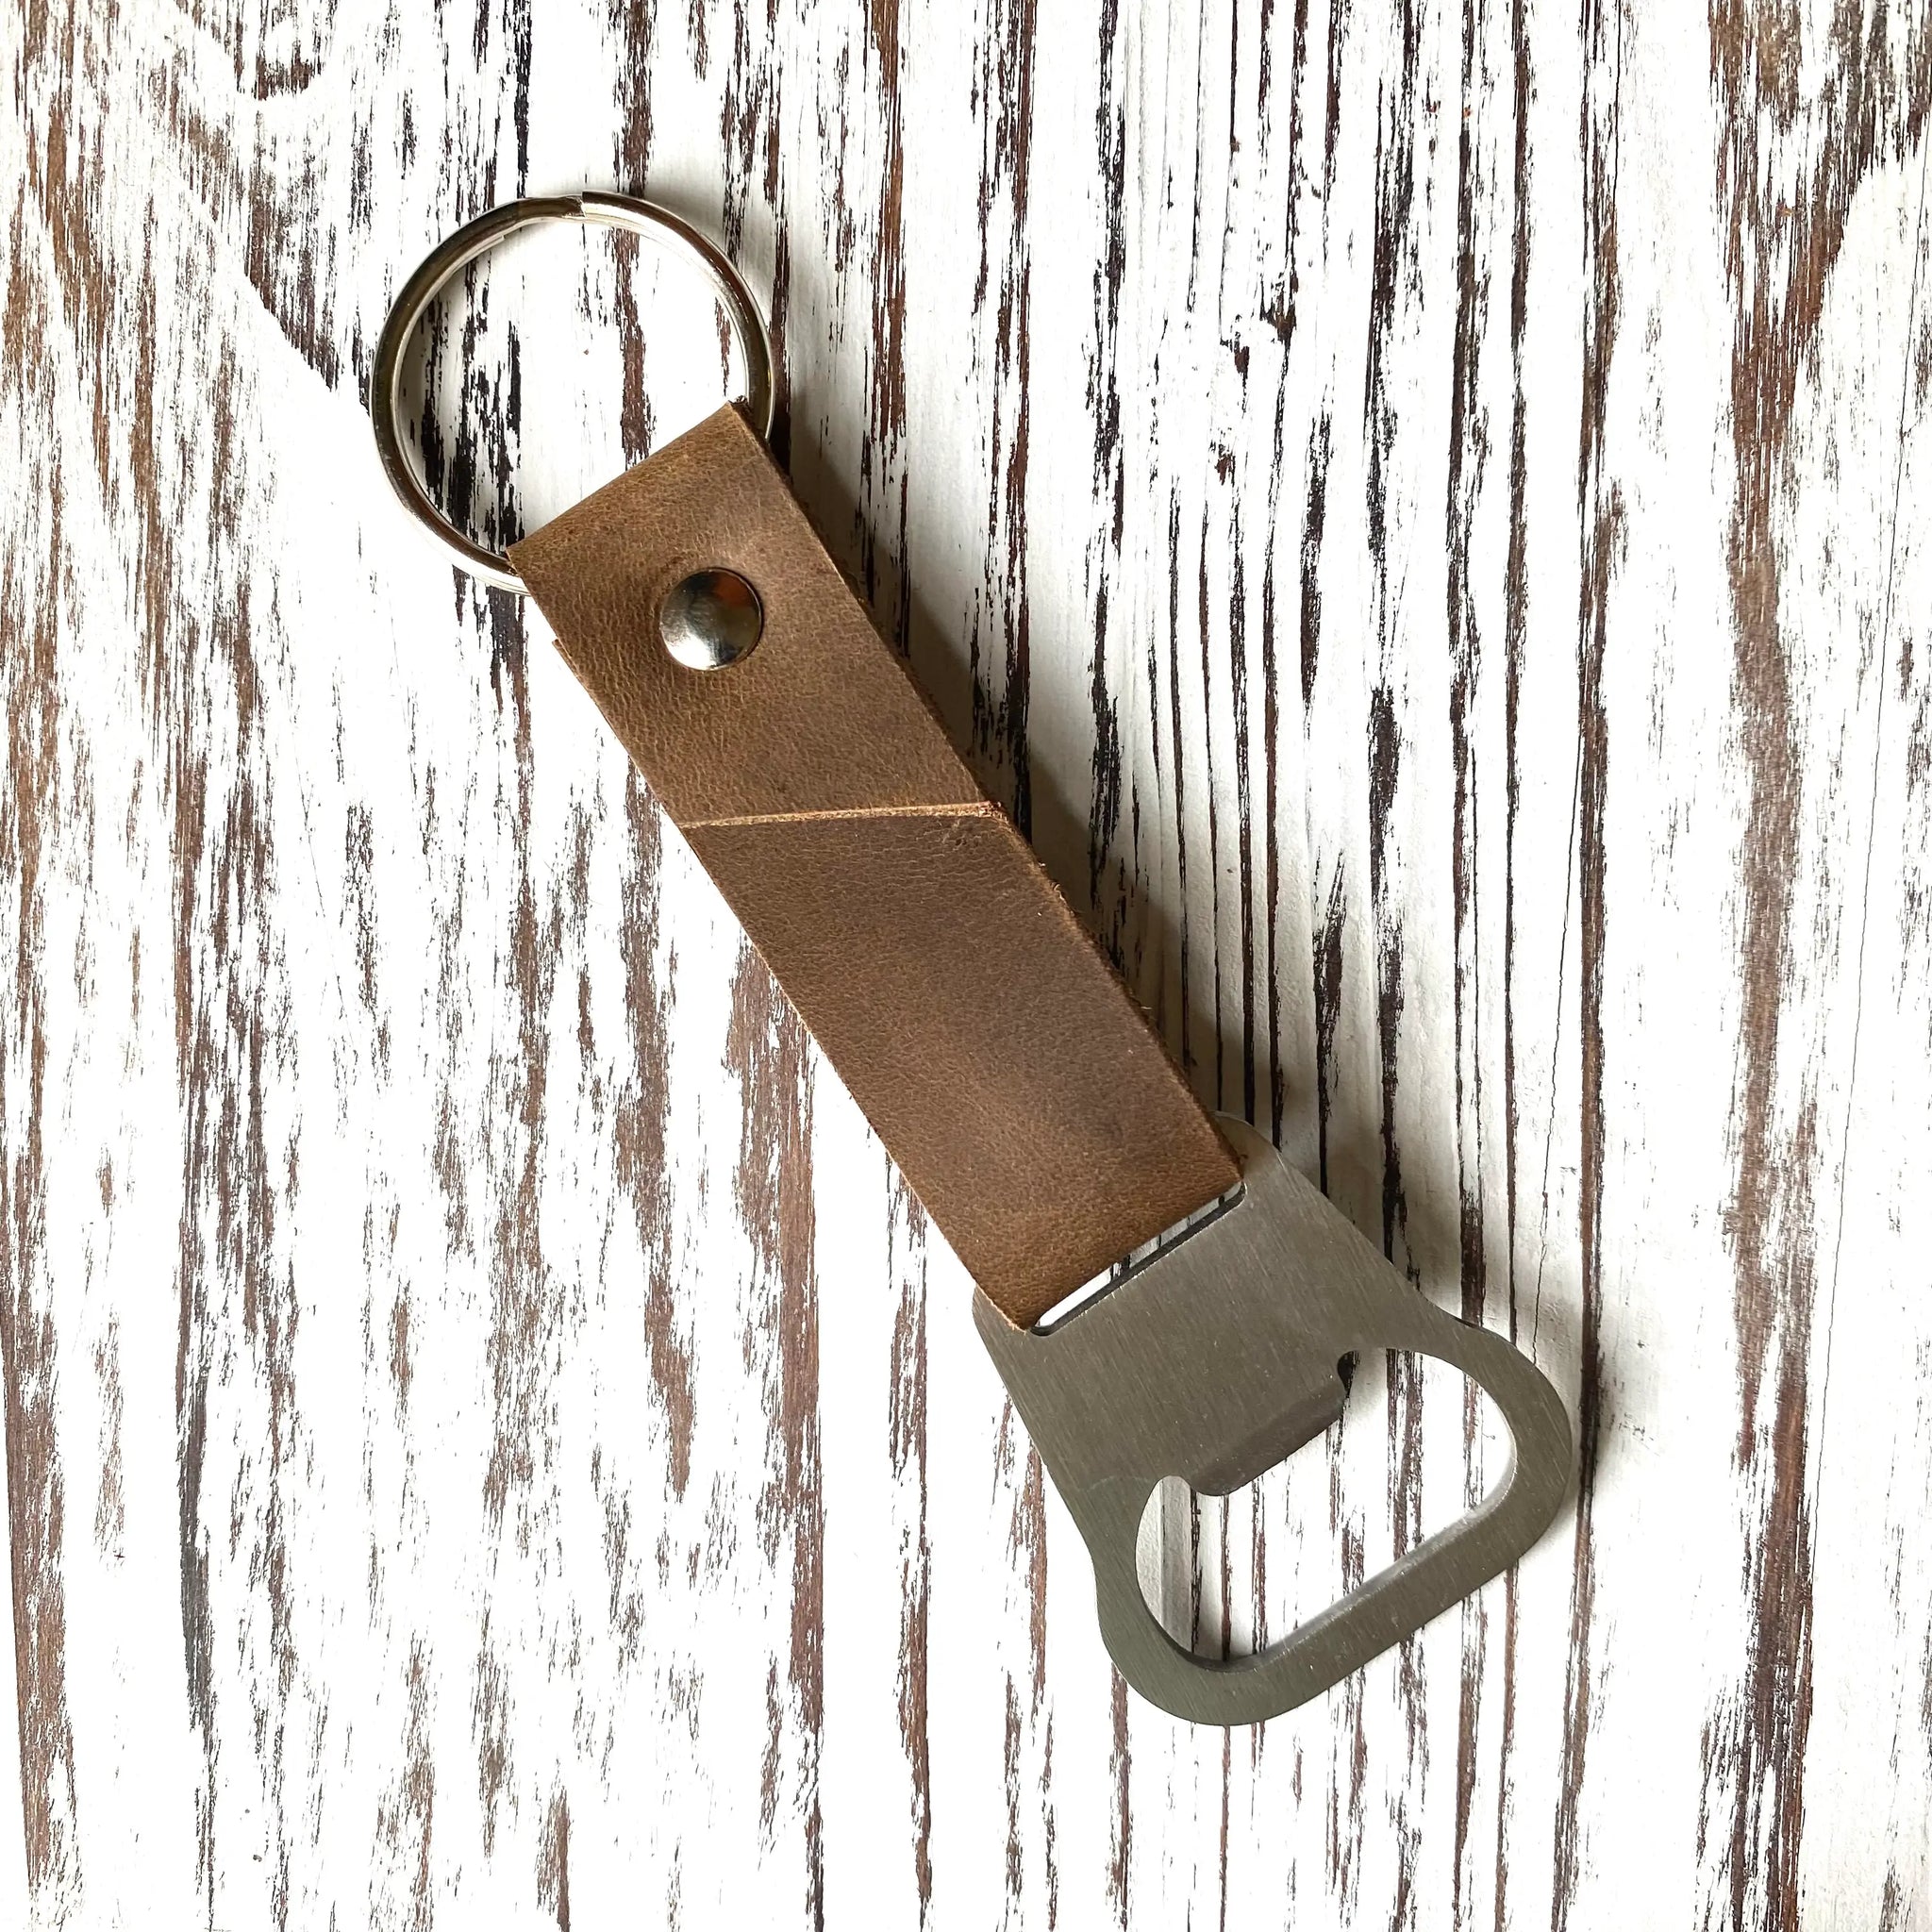 Leather Bottle Keychain